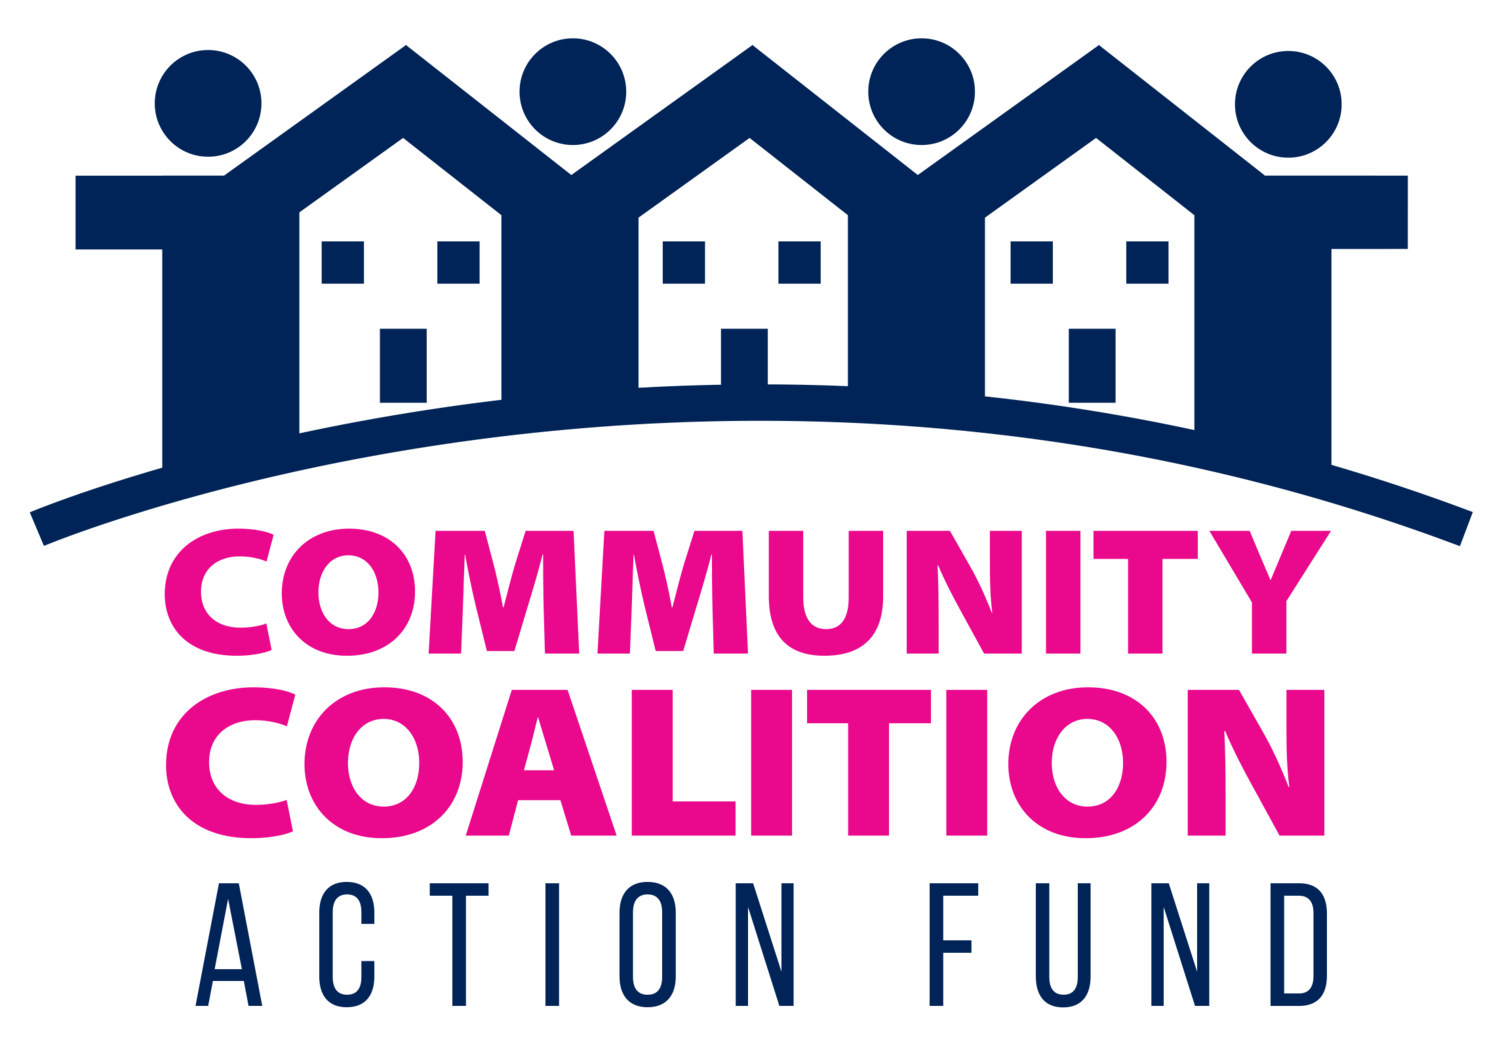 Community Coalition Action Fund